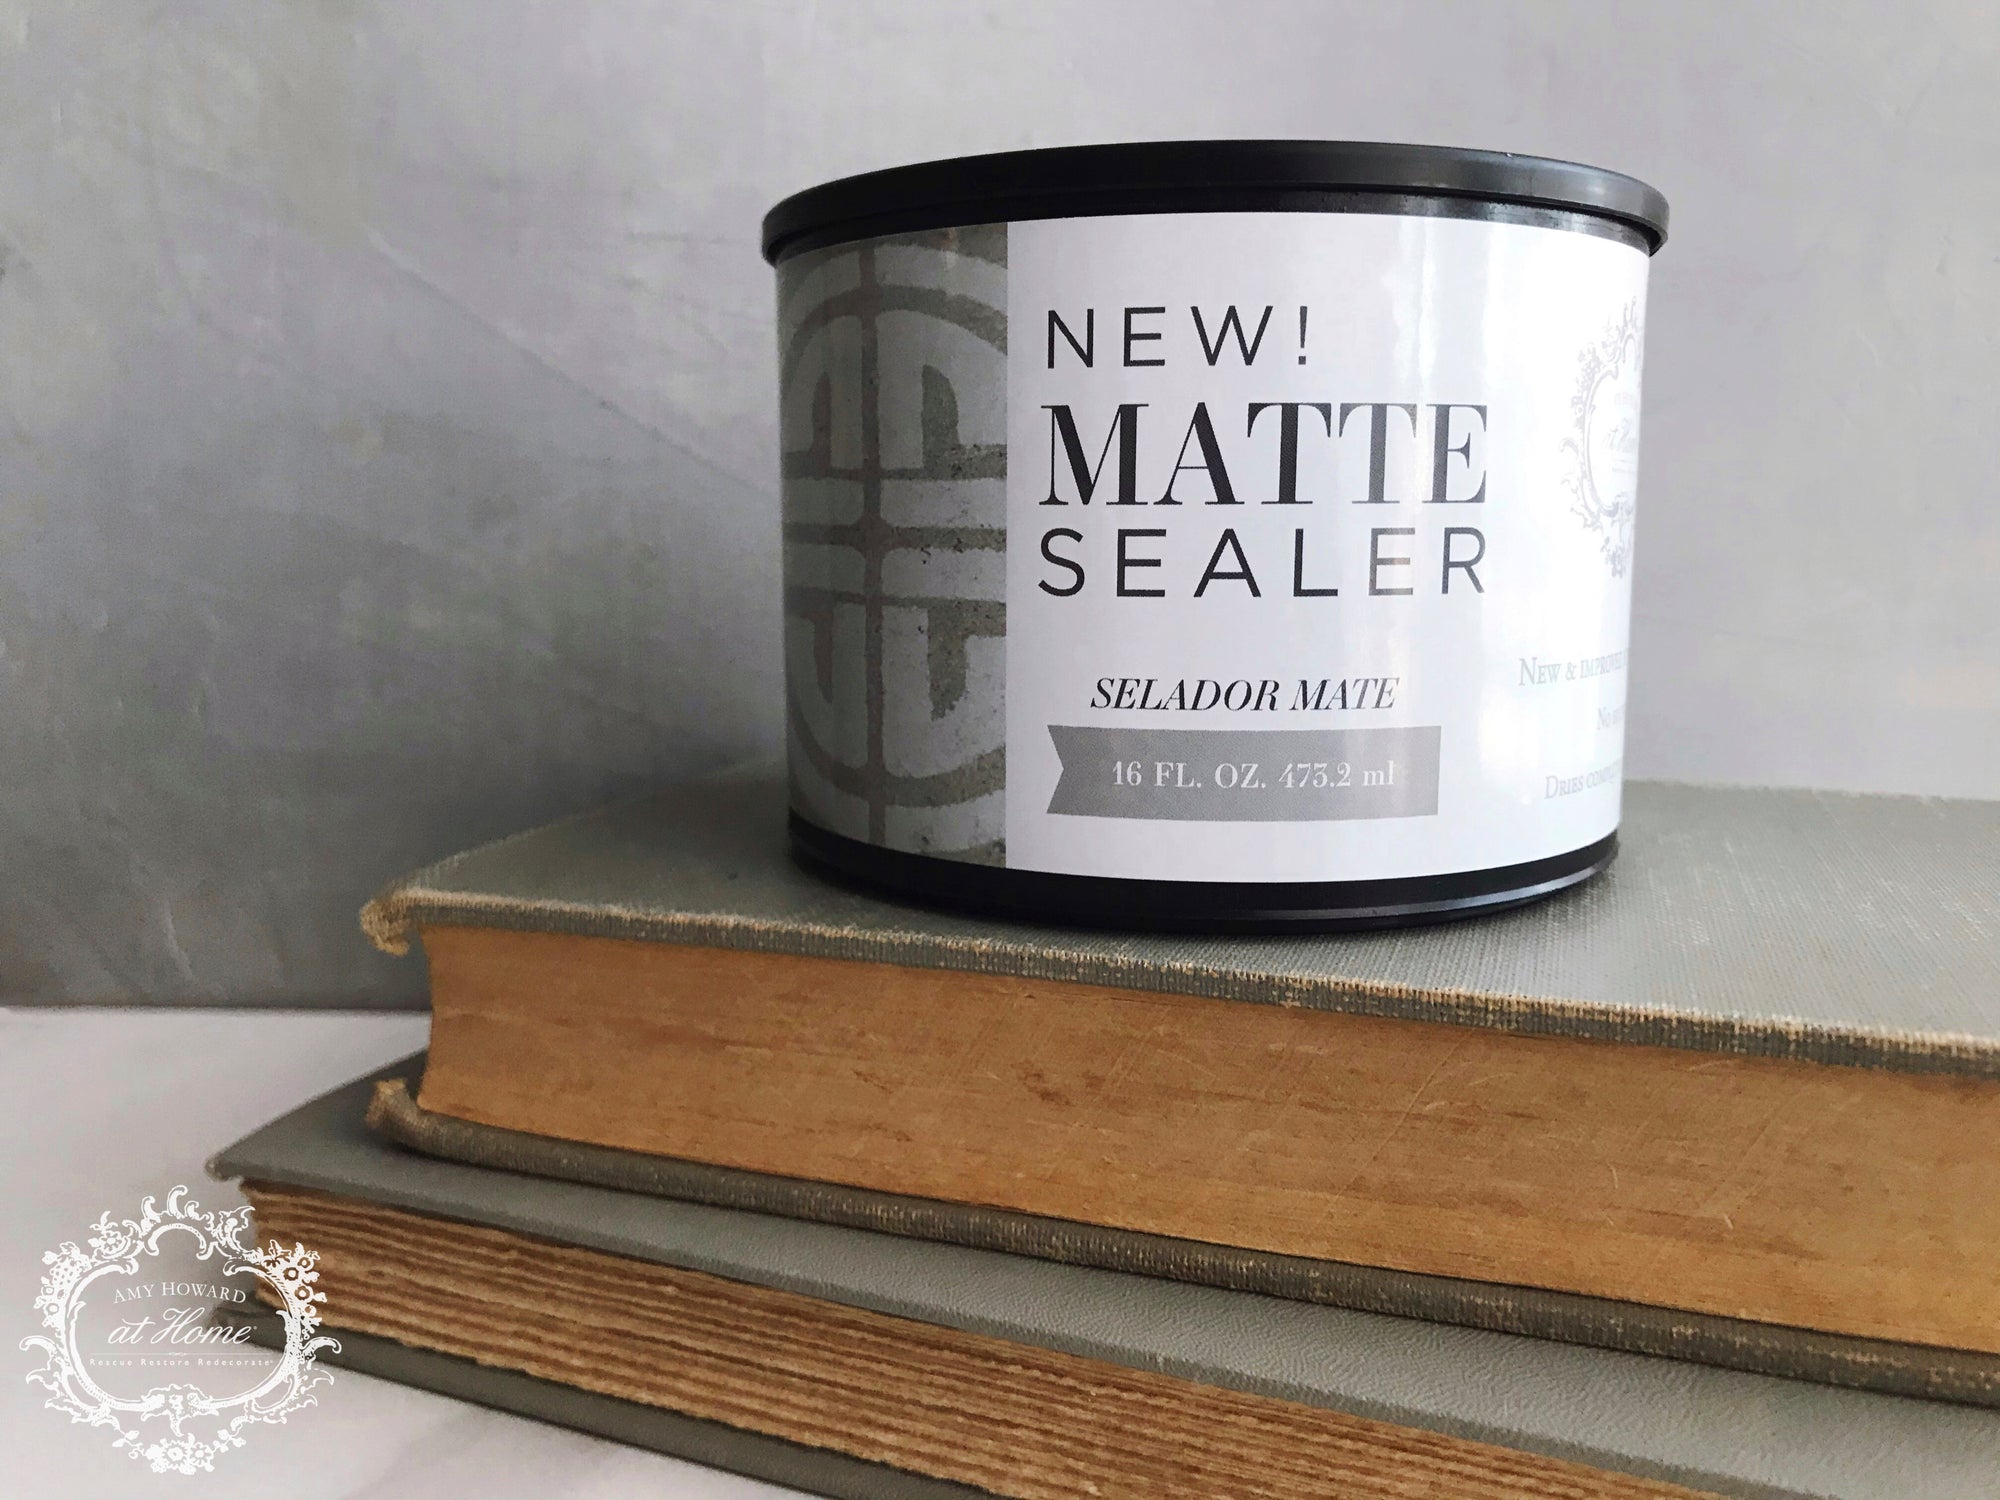 New! Matte Sealer - A Makers' Studio Store